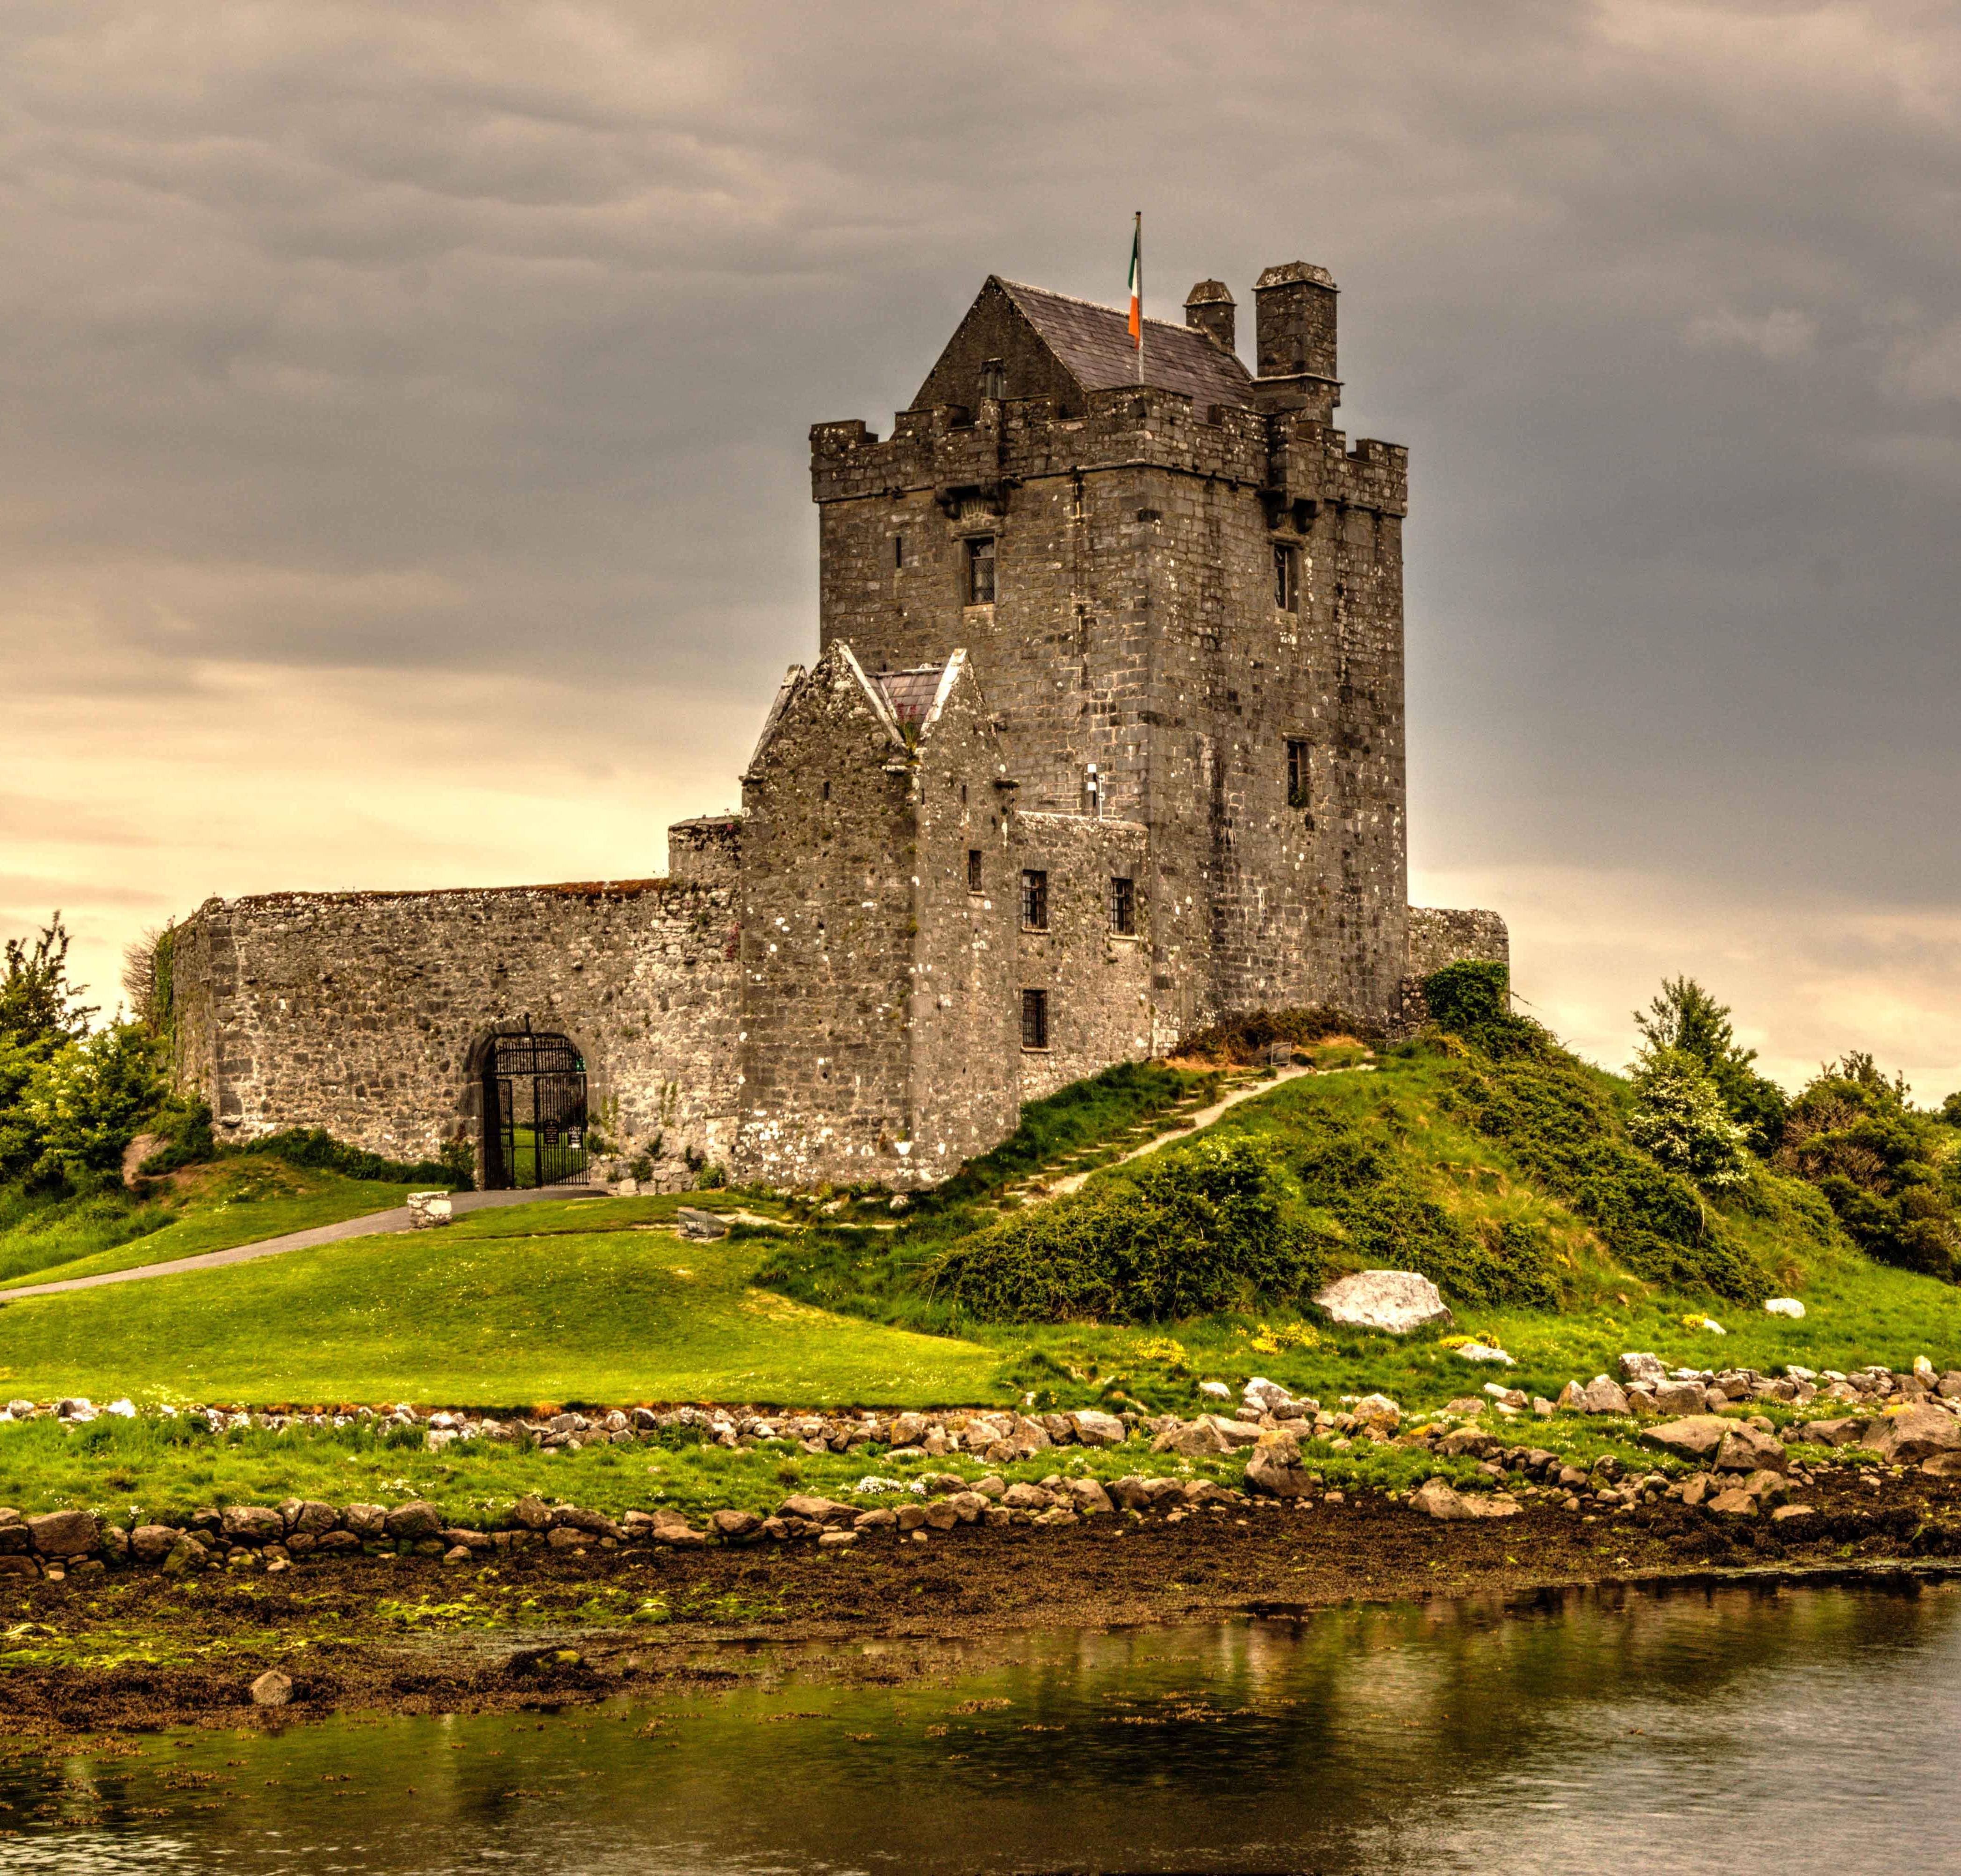 Irish castle on a lakeshore